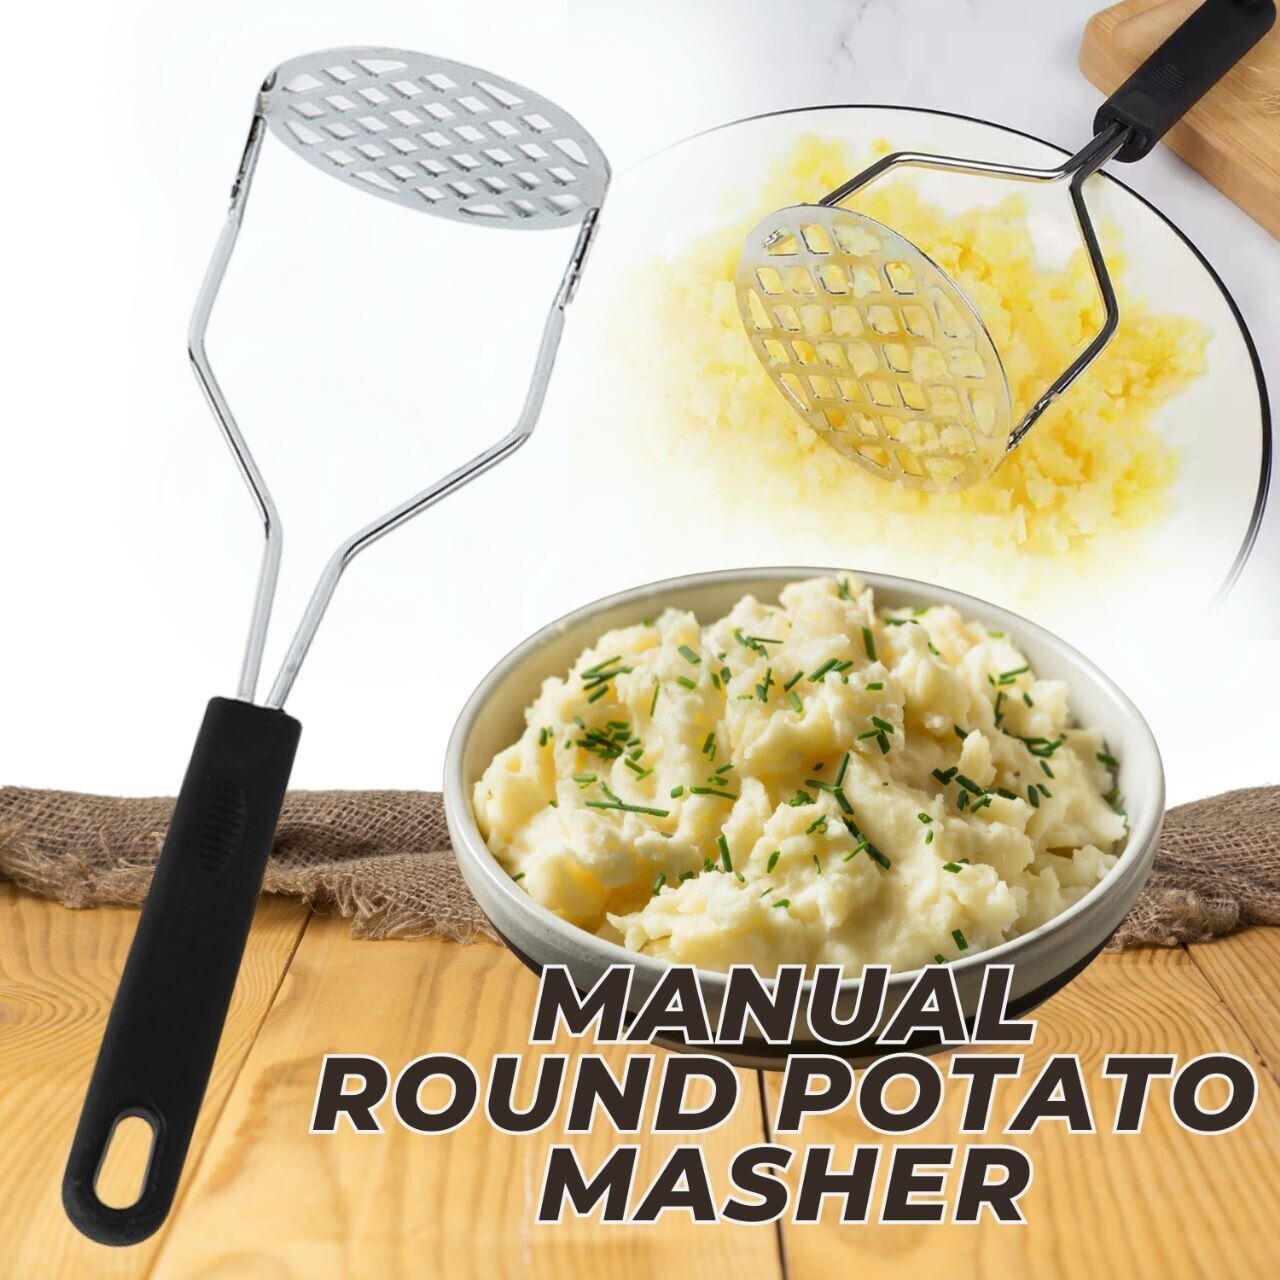 Stainless Steel Handle Potato Masher & Ricer Mash Potatoes Vegetables Tool